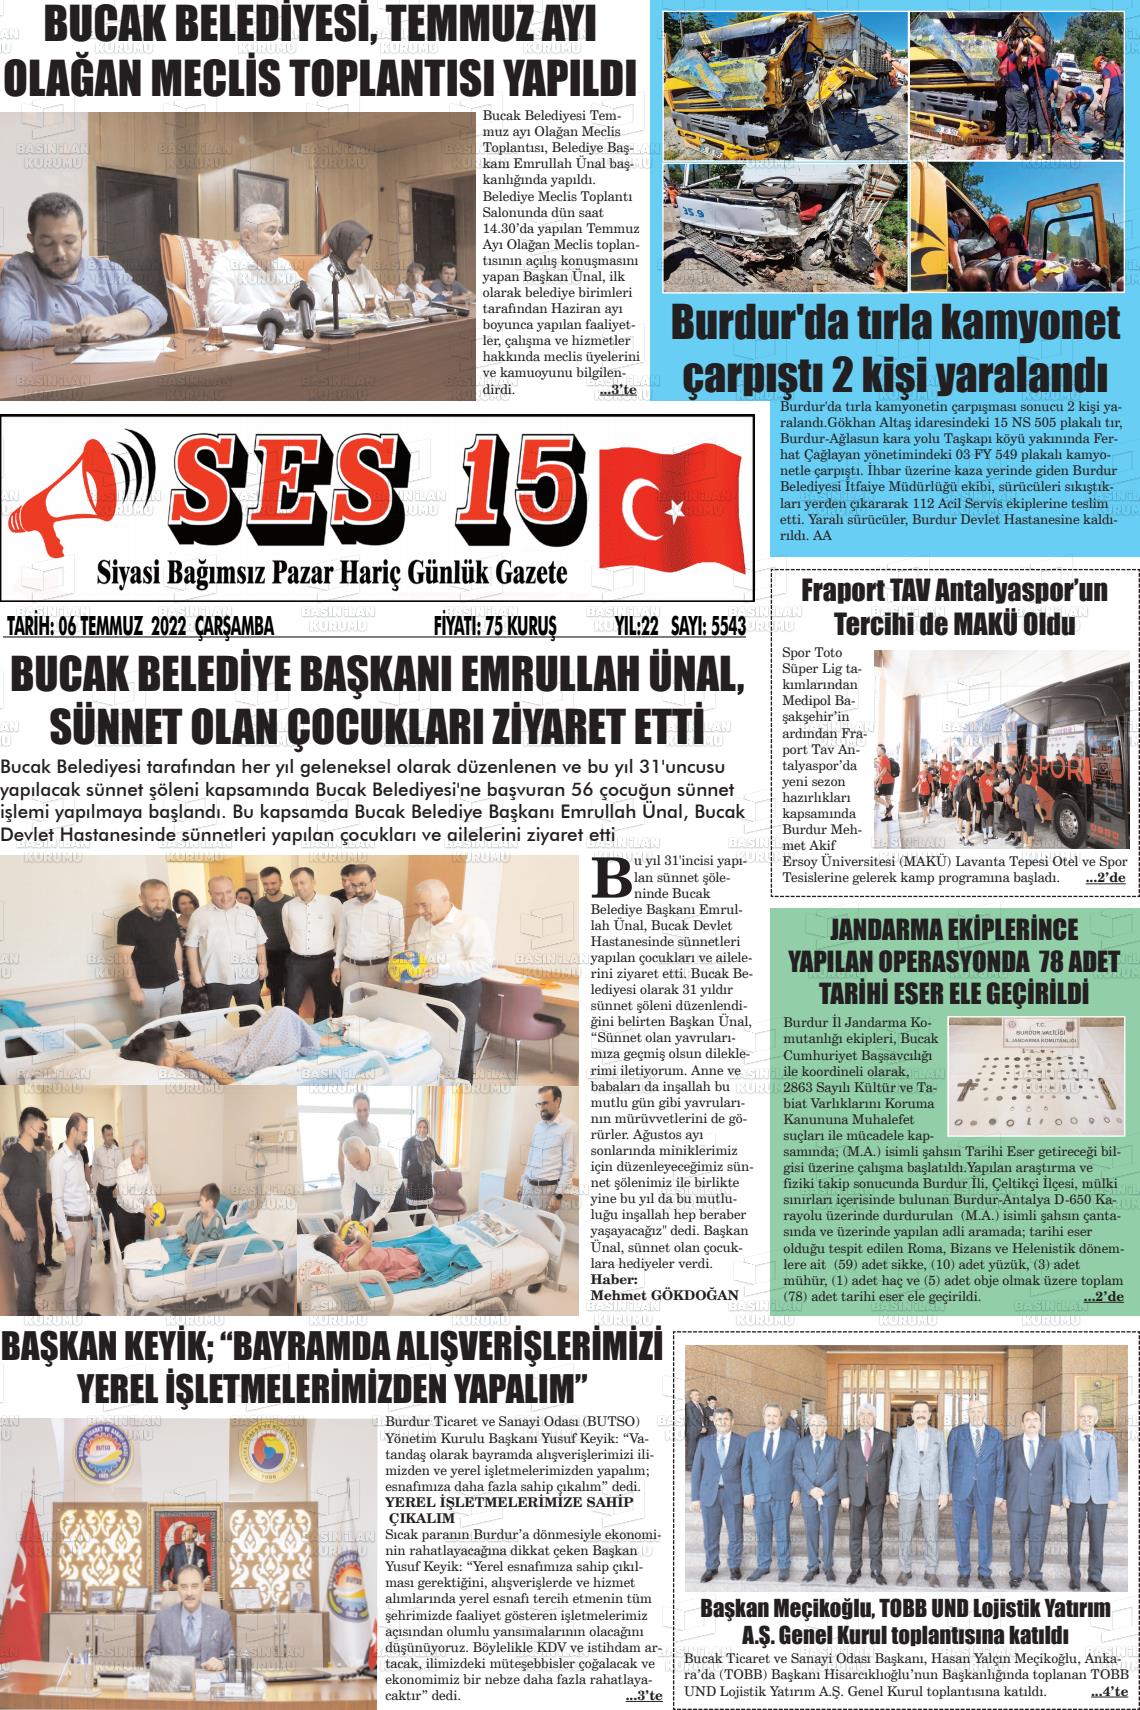 06 Temmuz 2022 Ses 15 Gazete Manşeti